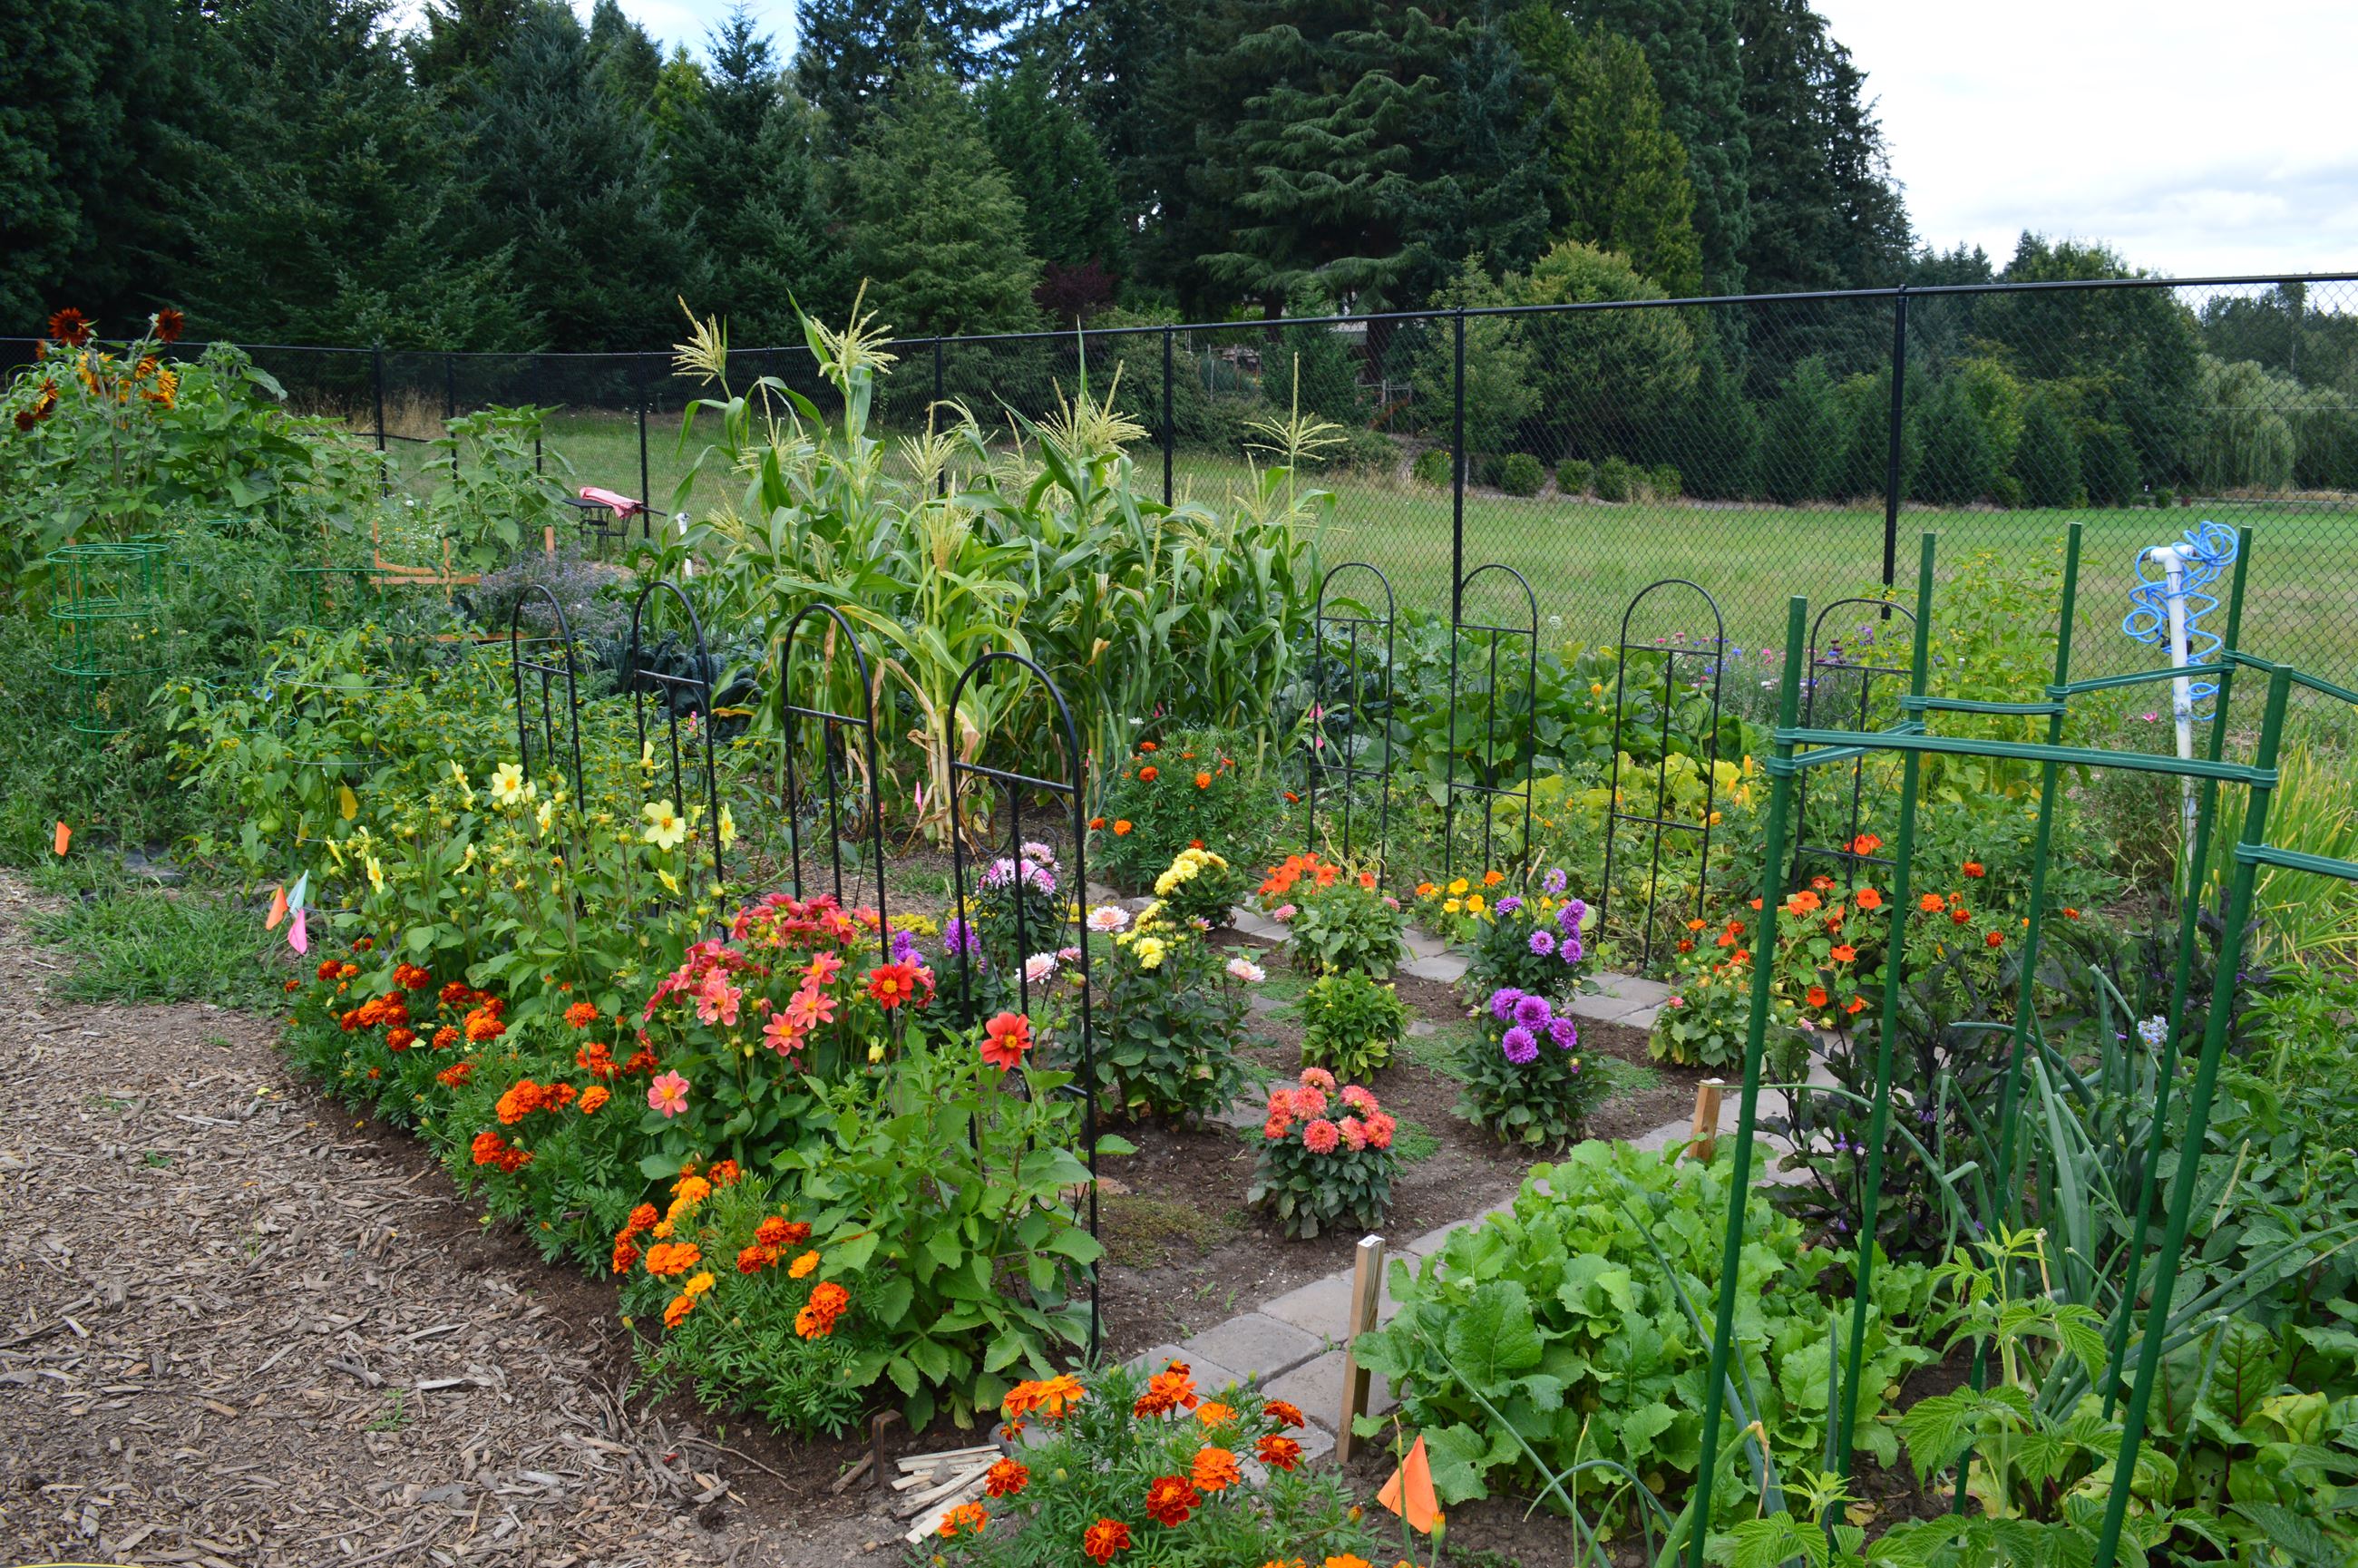 Get The Best Garden Hose For Watering Your Garden - Johnny's Blog